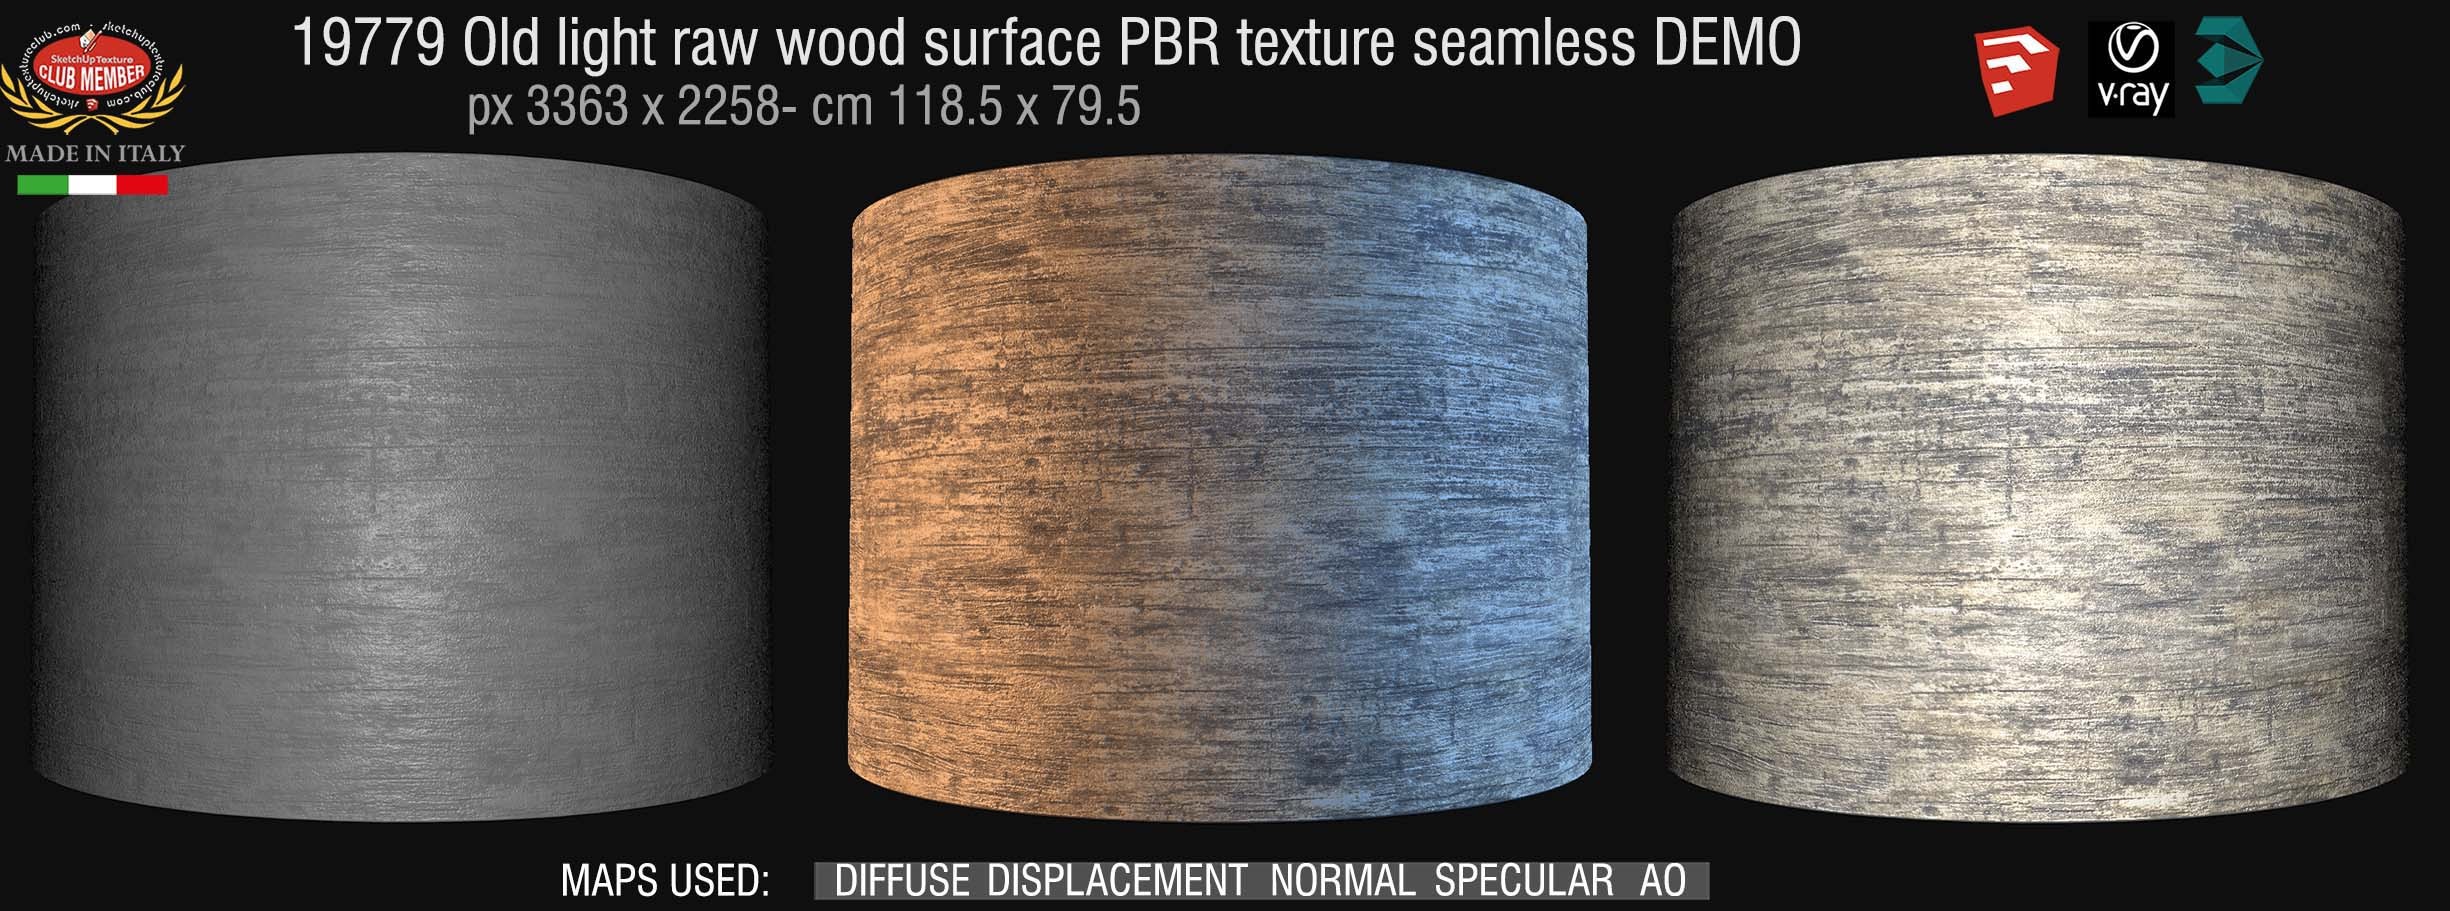 19779 Old light raw wood PBR texture seamless DEMO